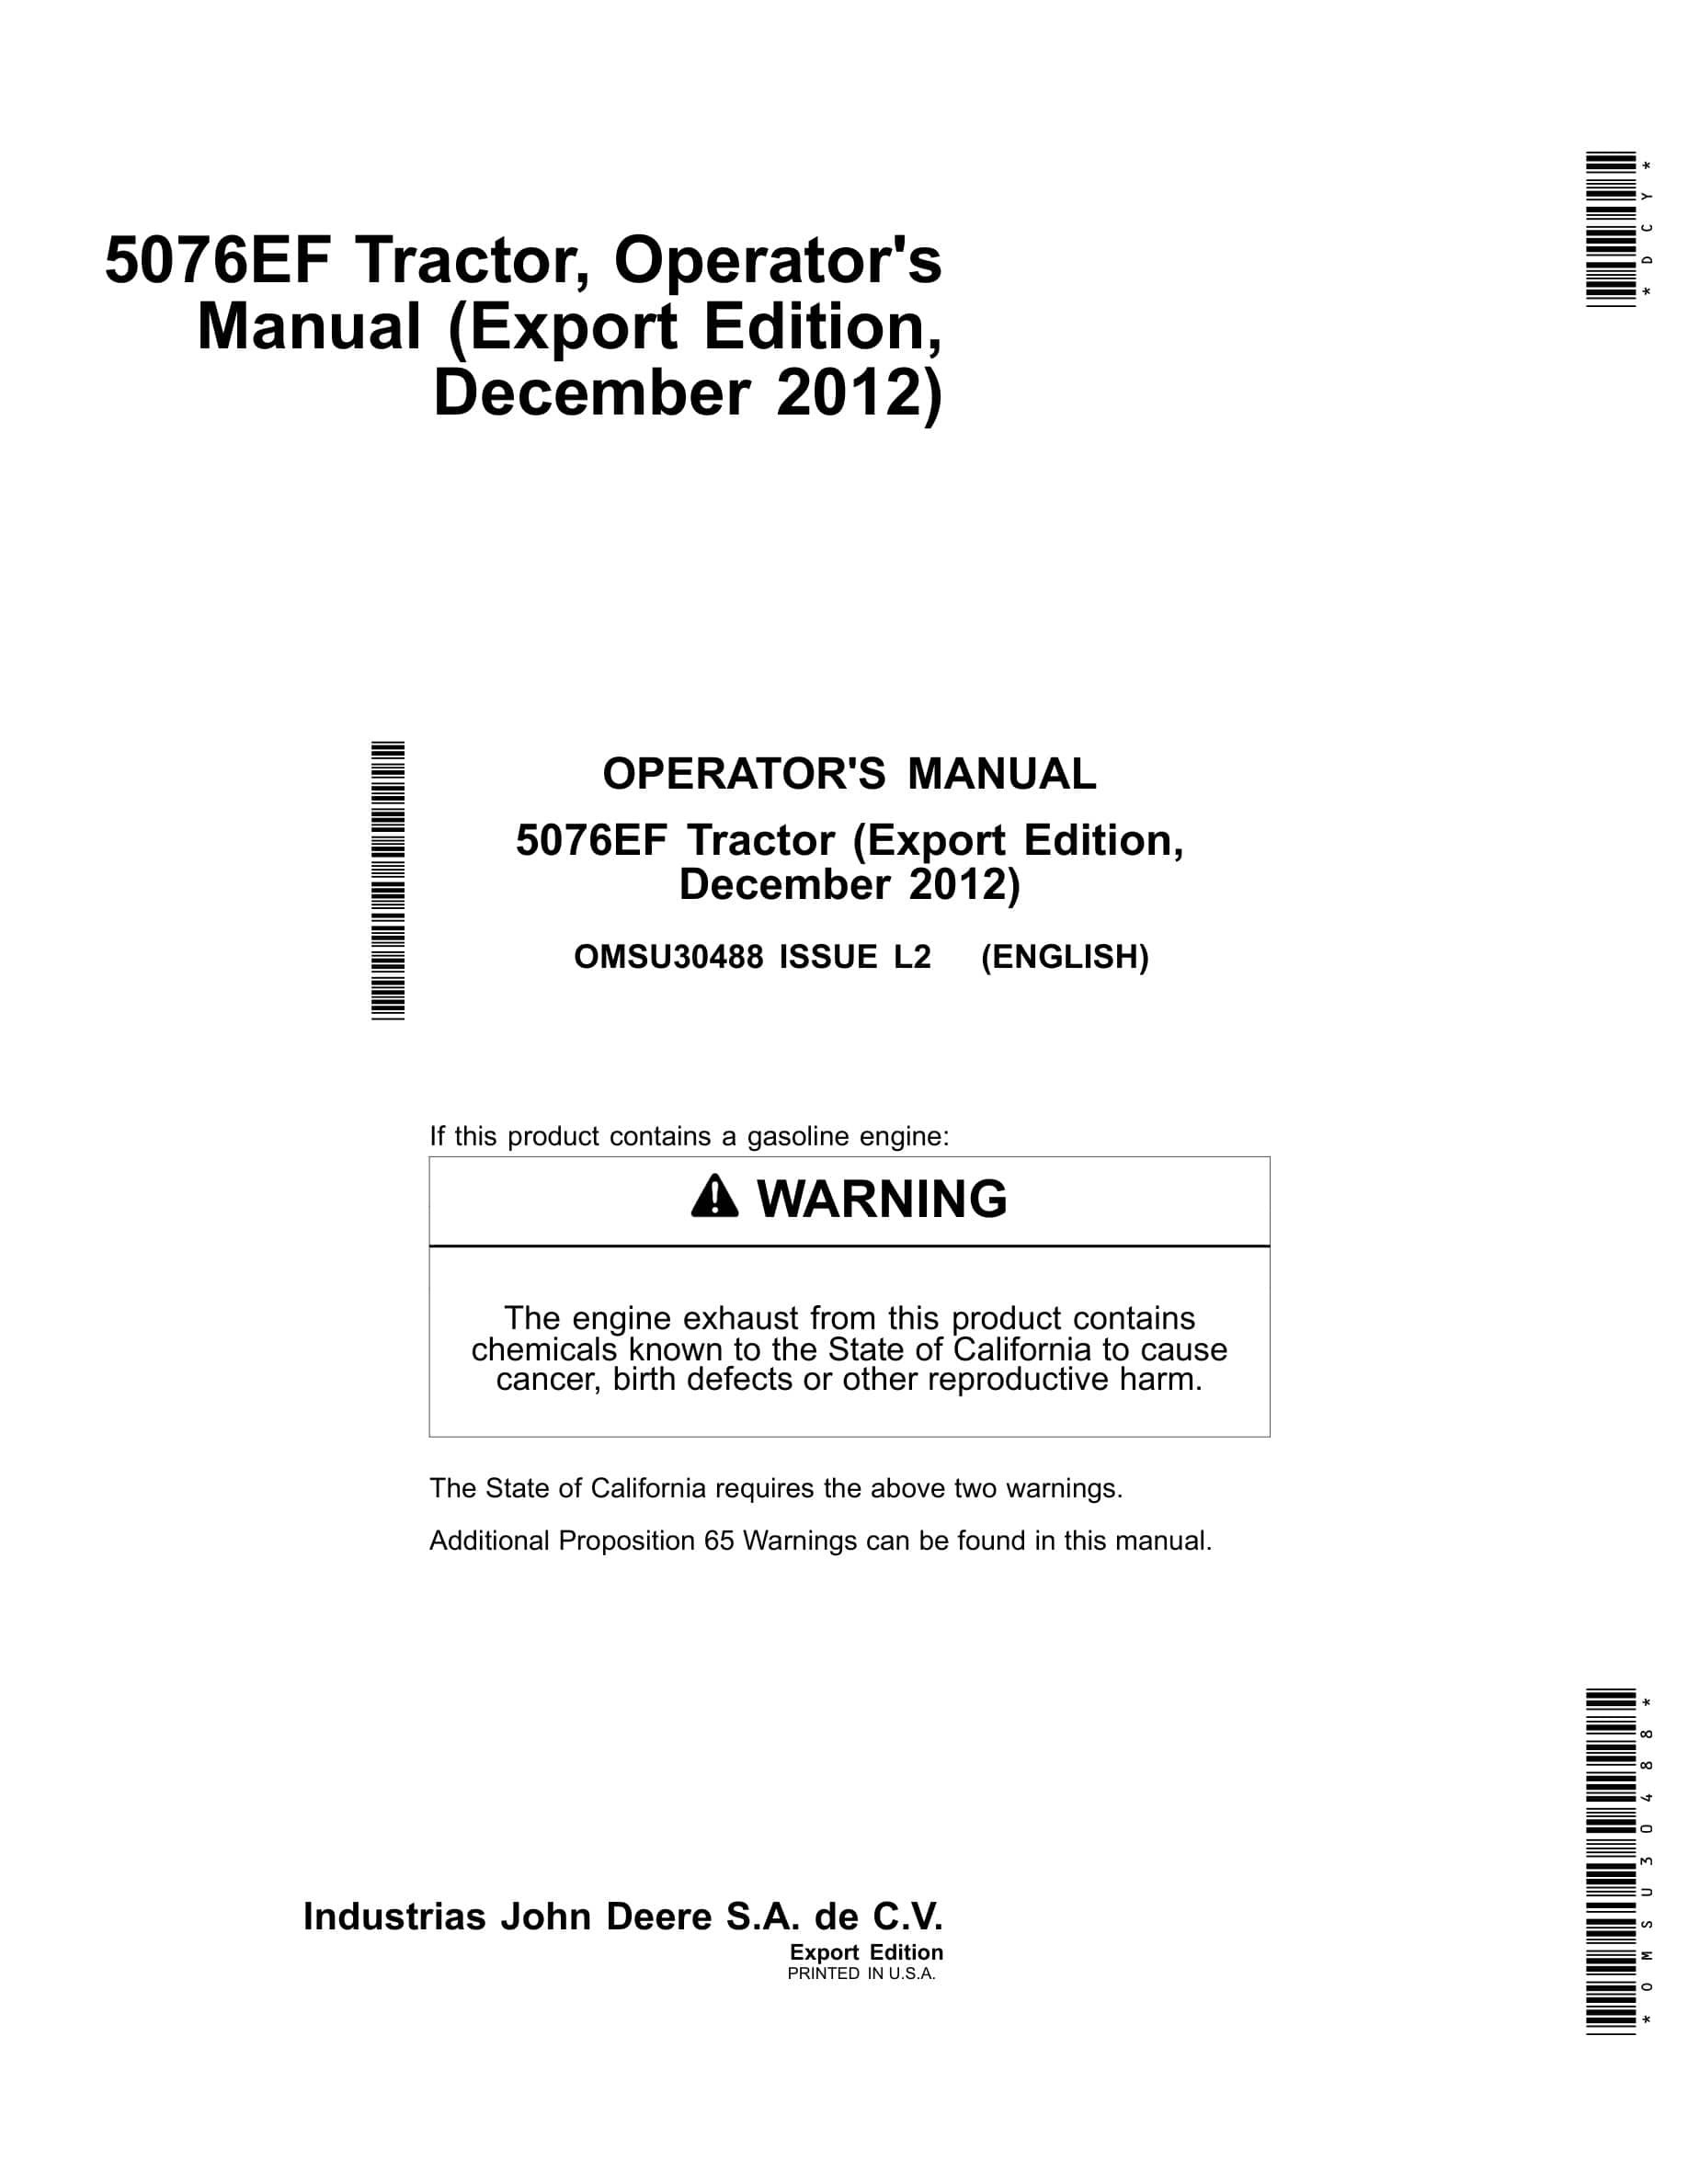 John Deere 5076ef Tractors Operator Manual OMSU30488-1